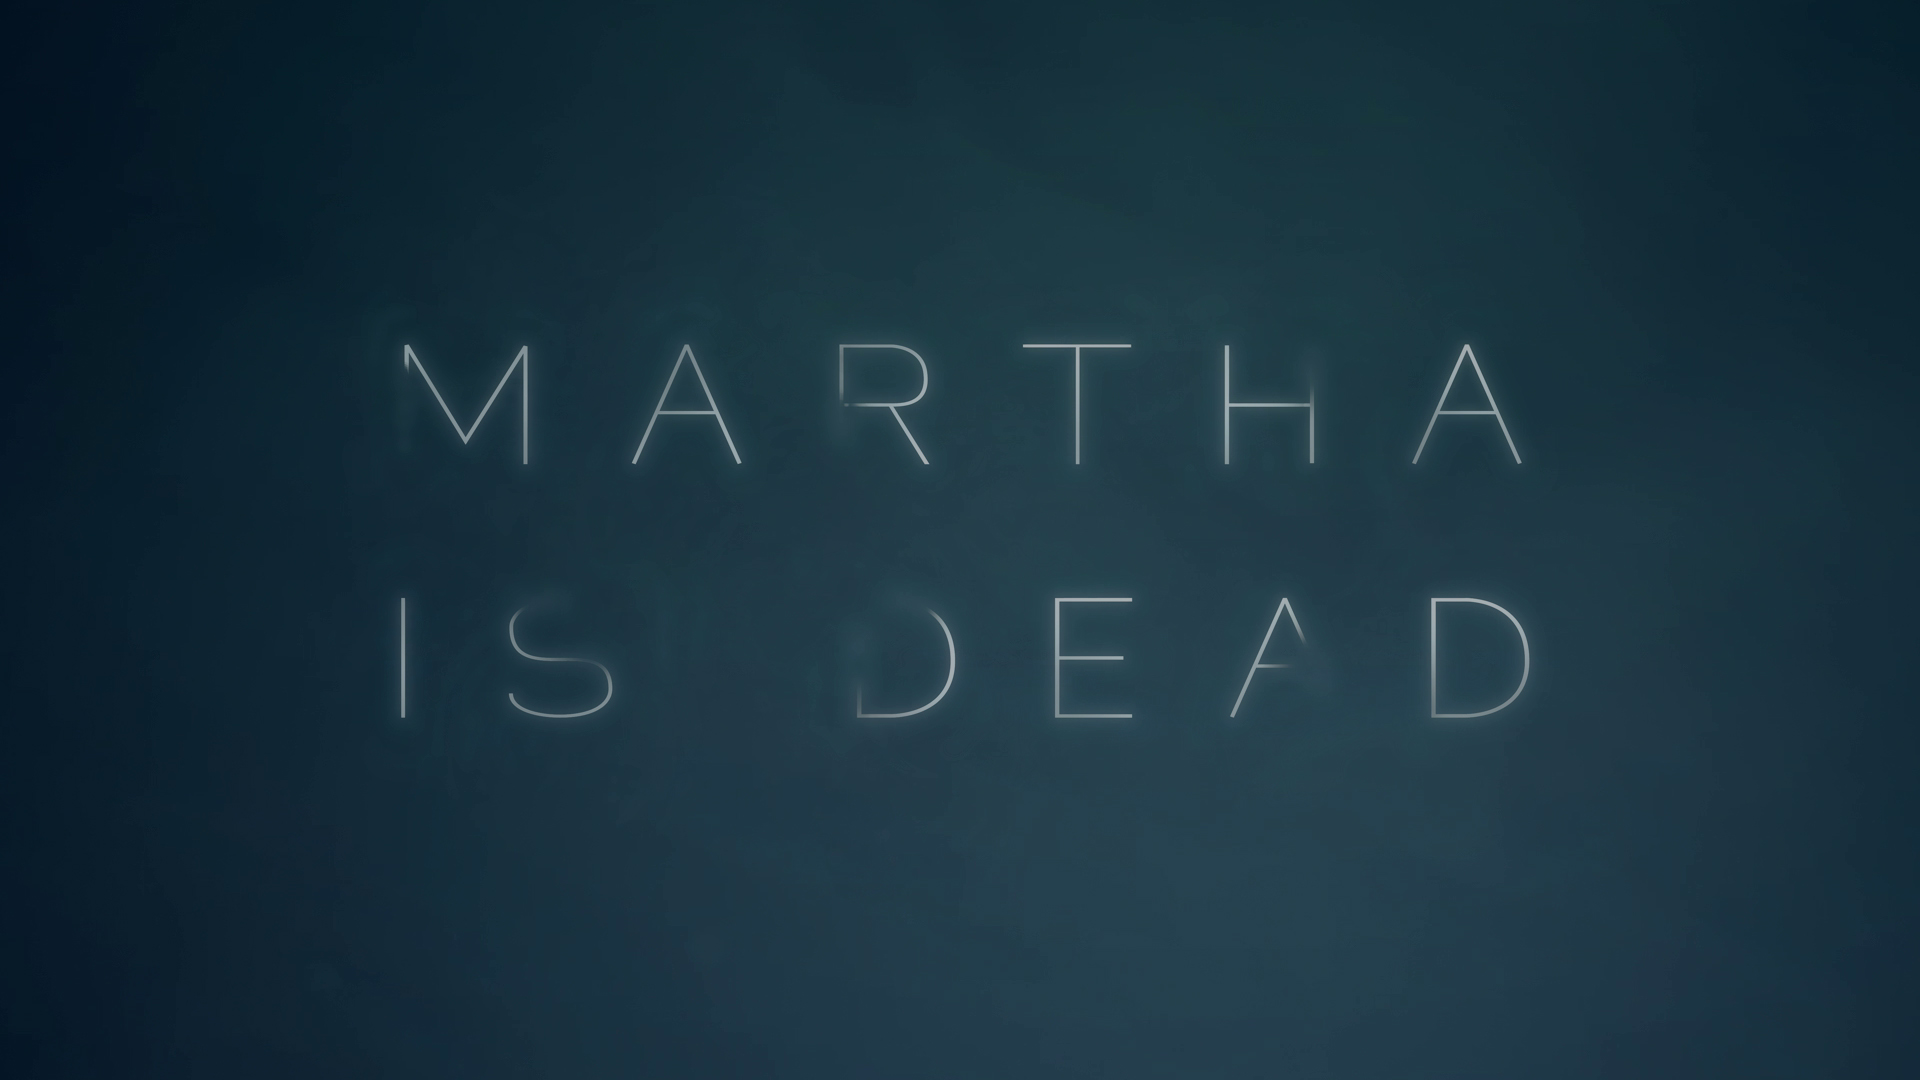 download martha is dead switch